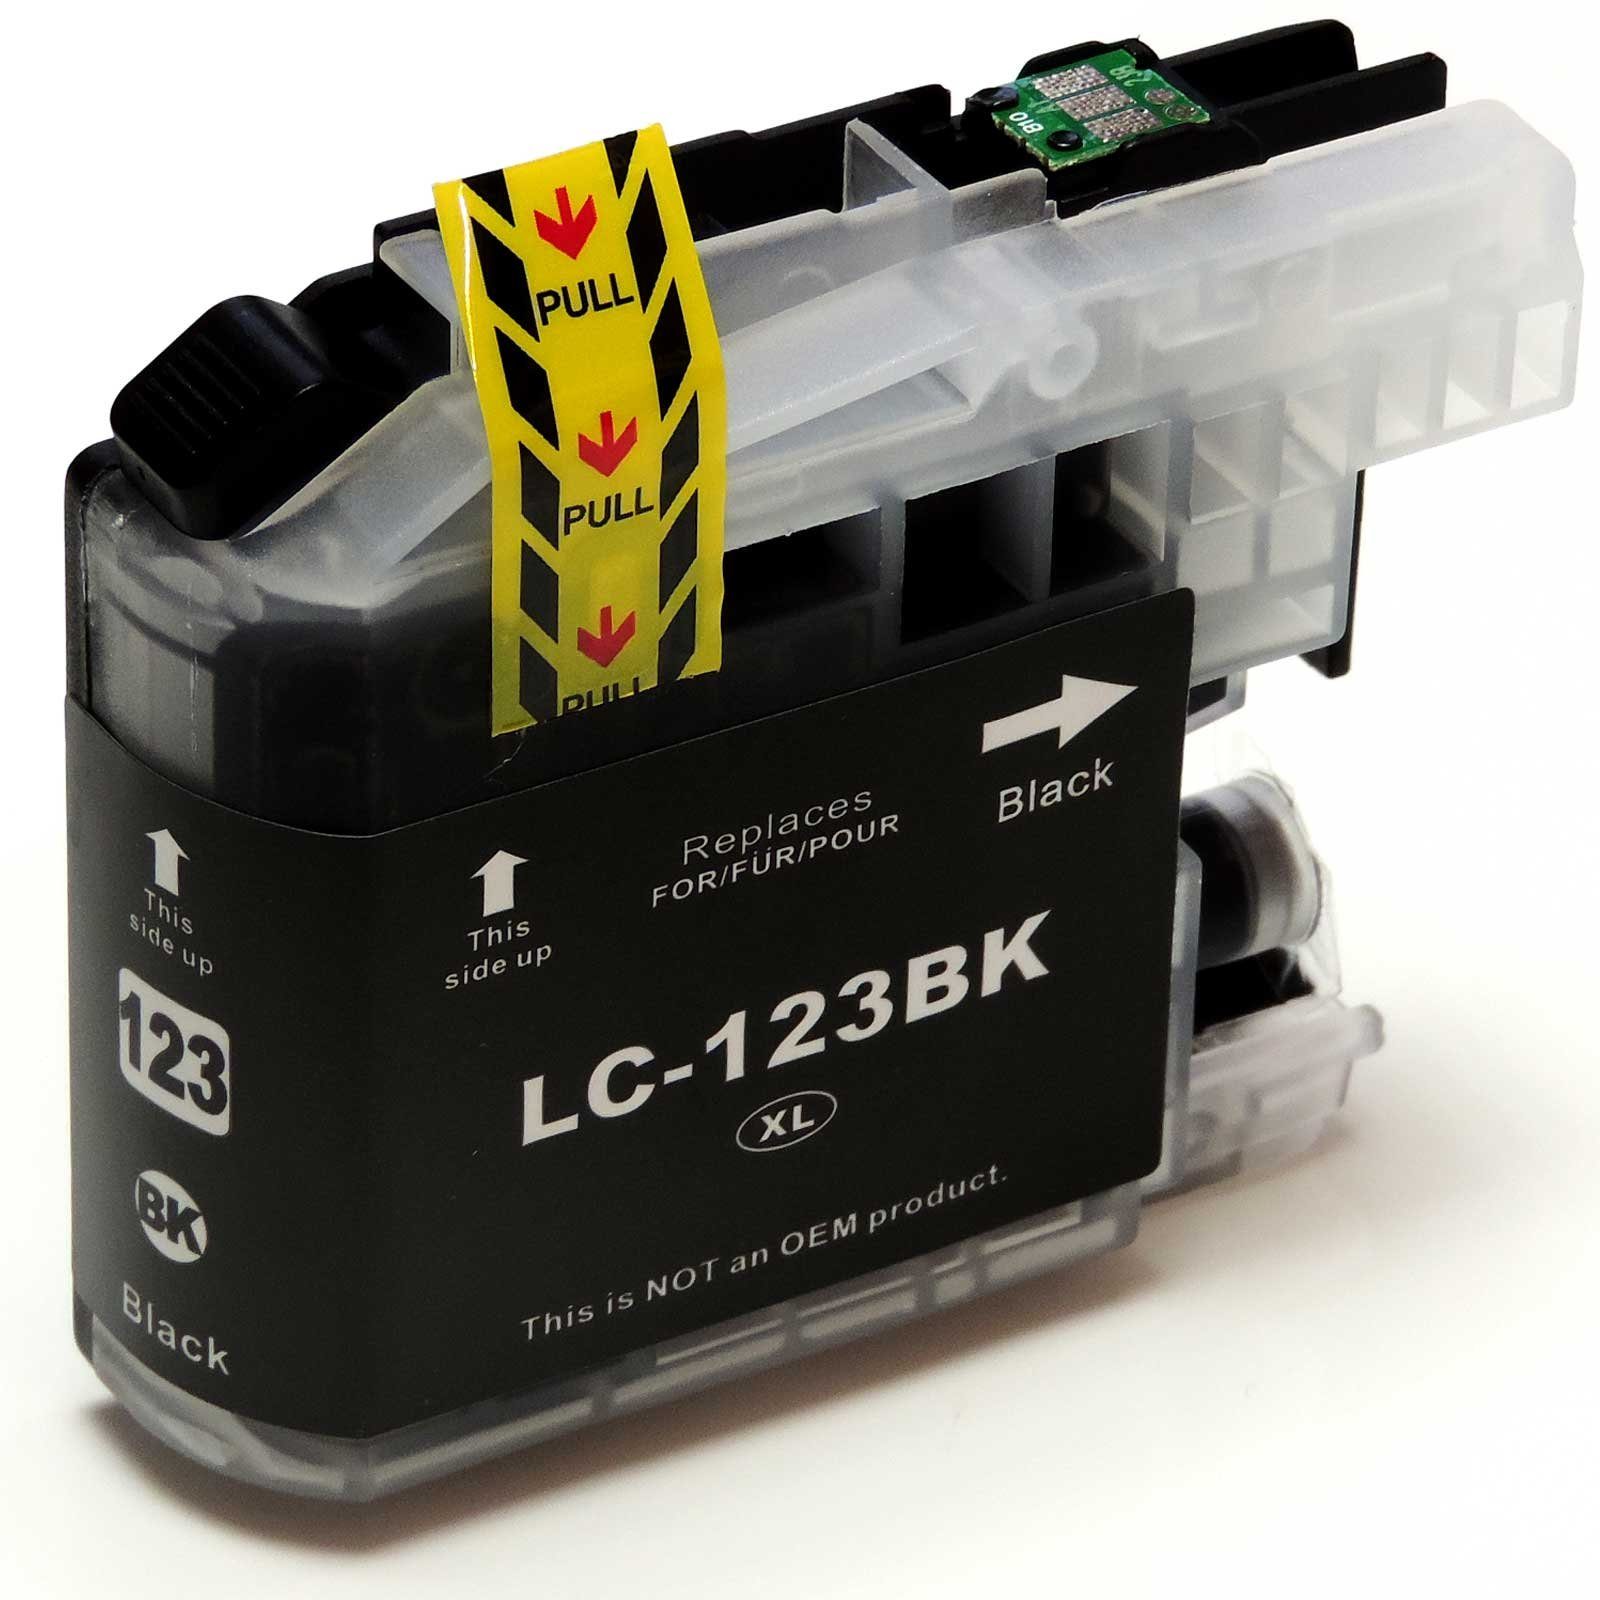 D&C Kompatibel Brother LC-123 XL Schwarz Tintenpatrone